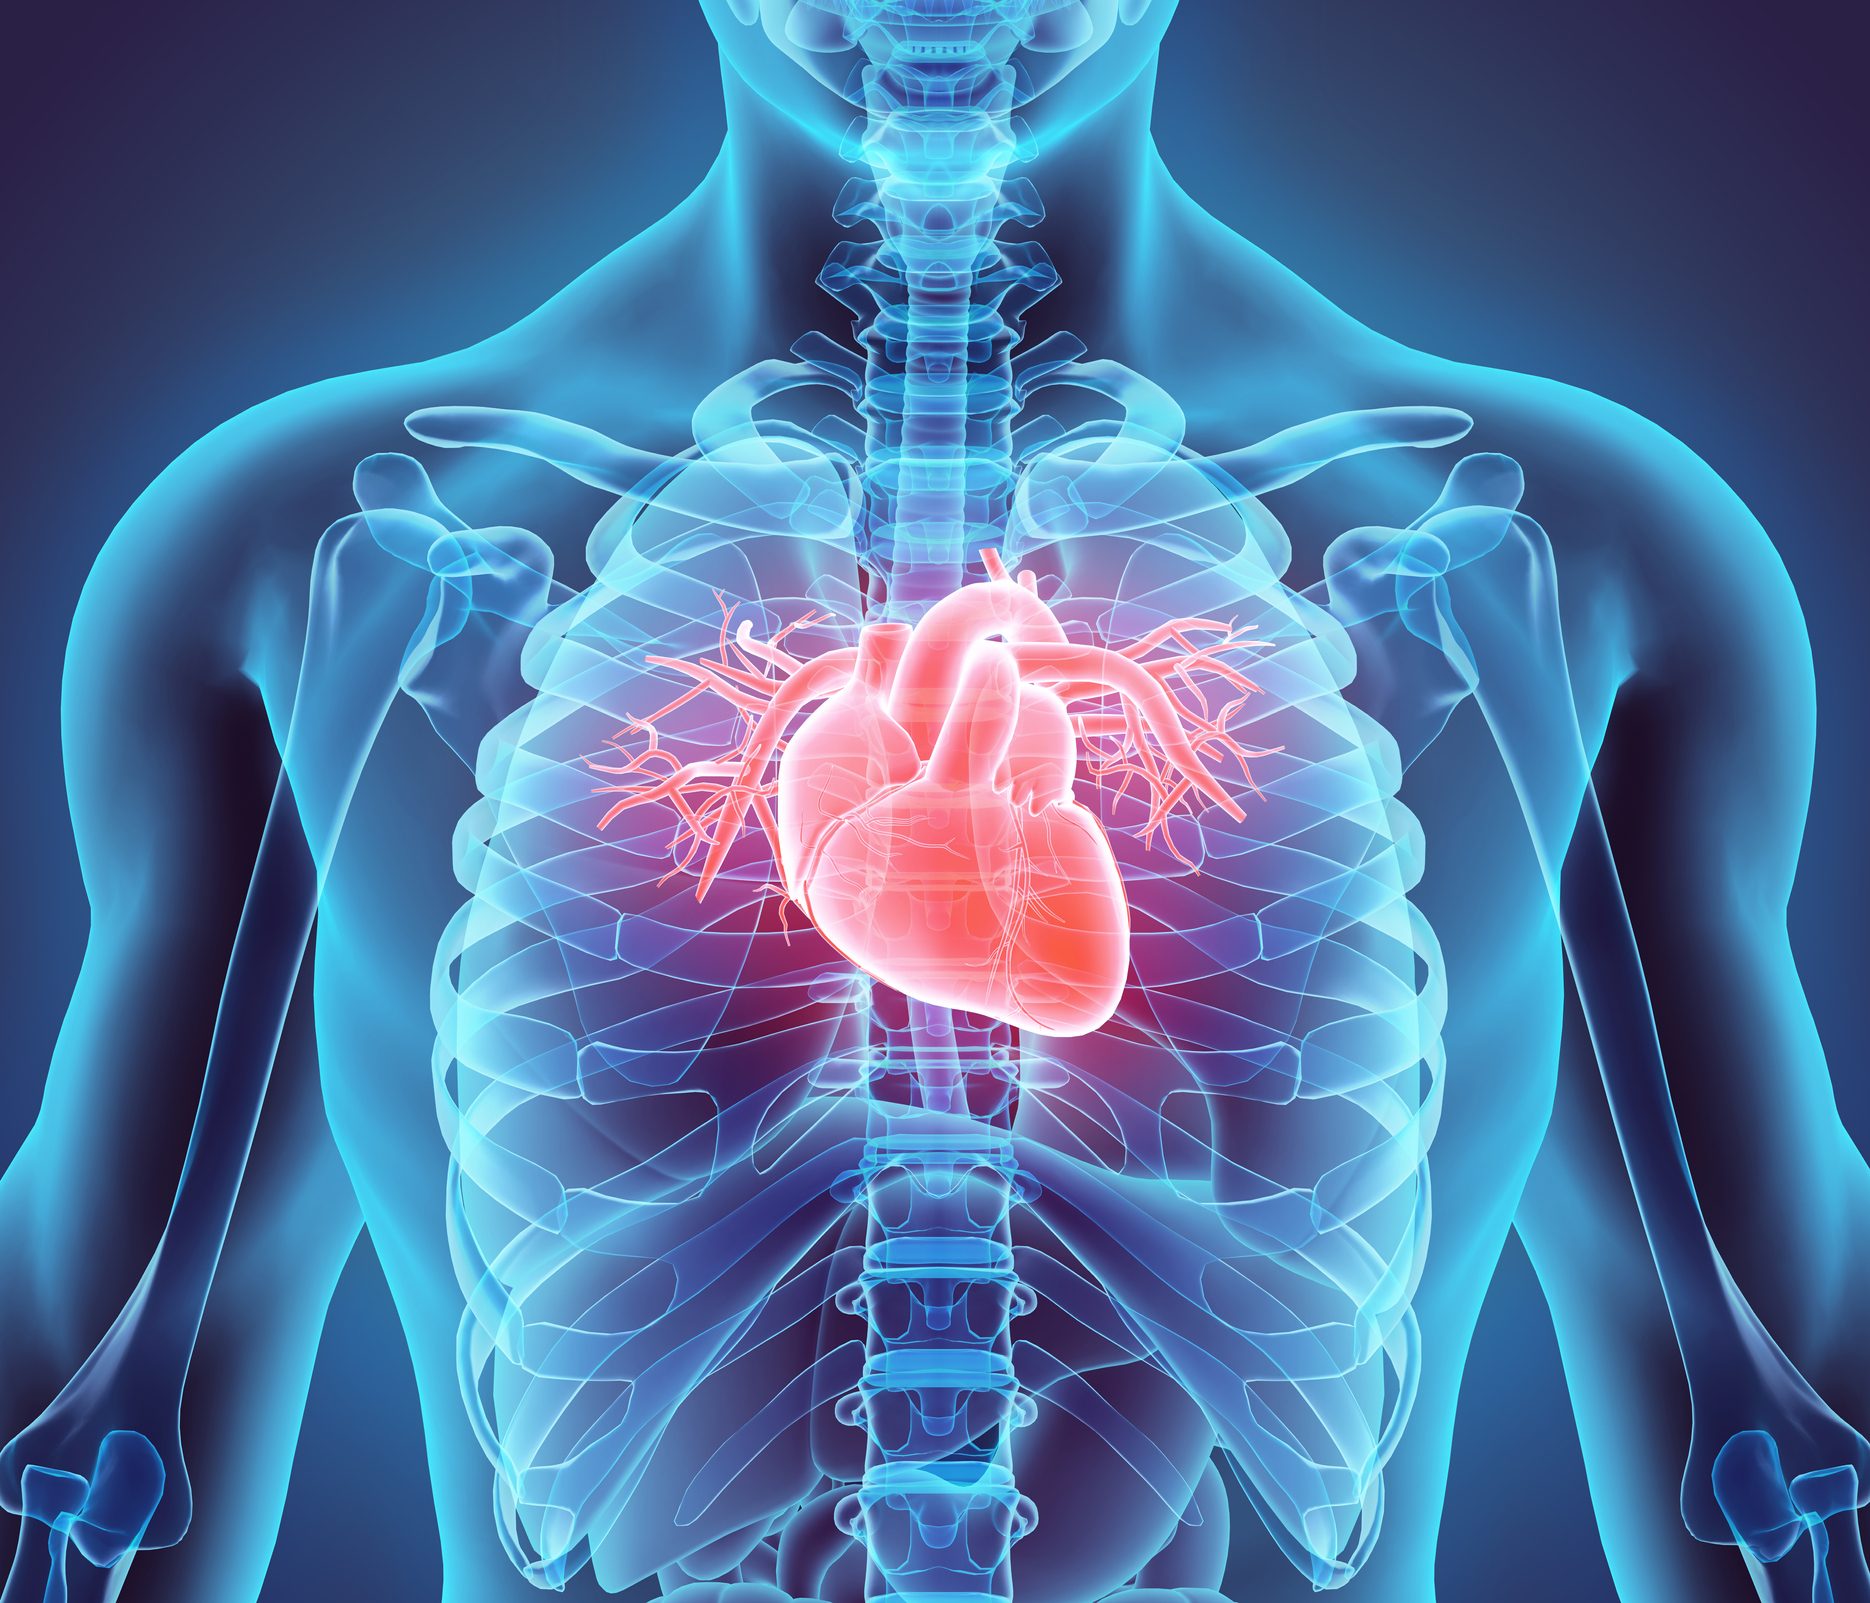 3D illustration of Heart in chest